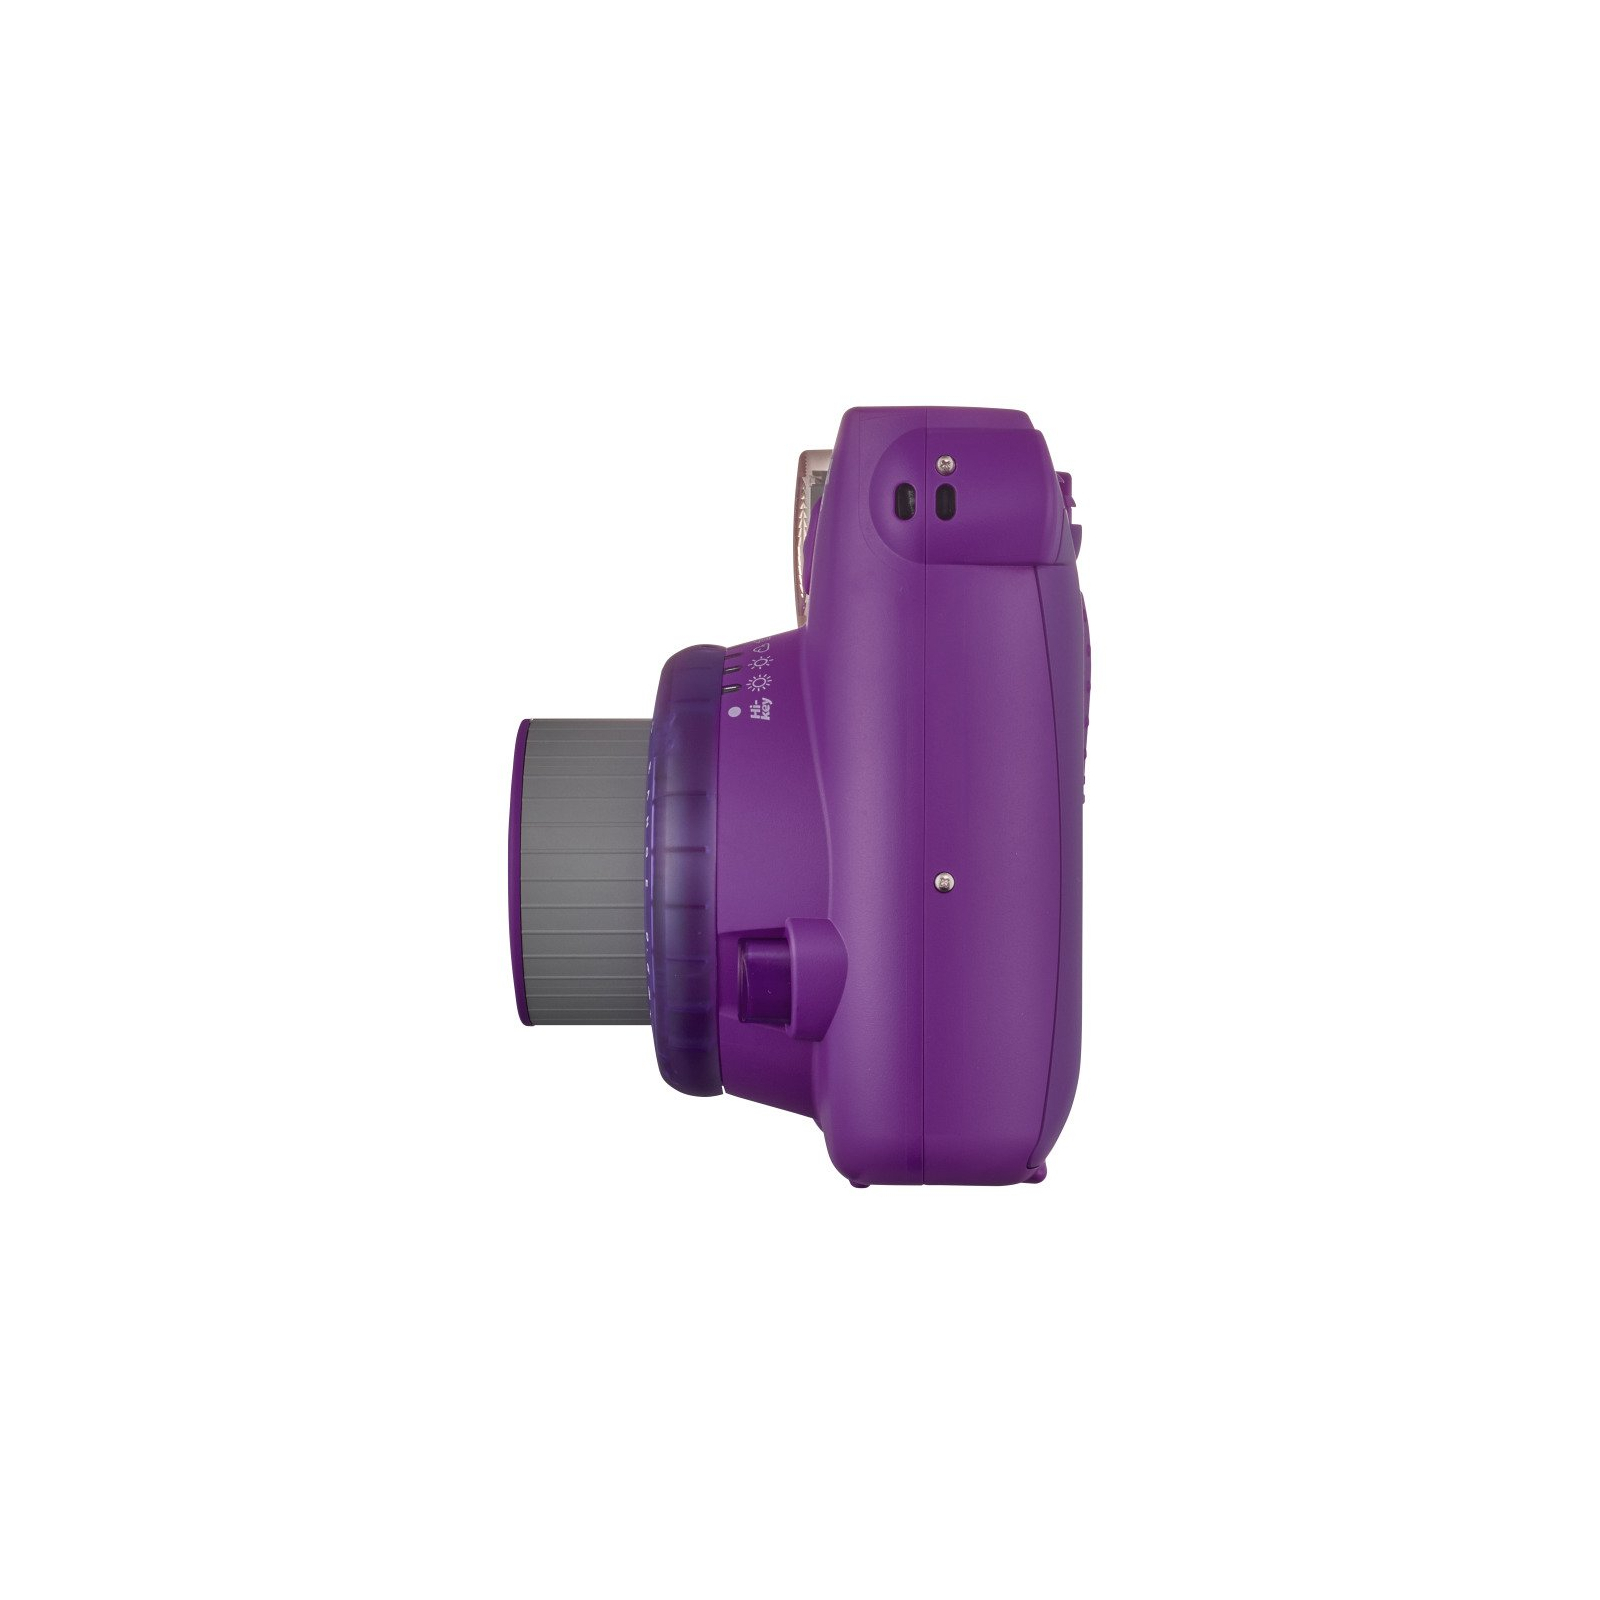 Камера моментальной печати Fujifilm INSTAX Mini 9 Purple (16632922) изображение 3